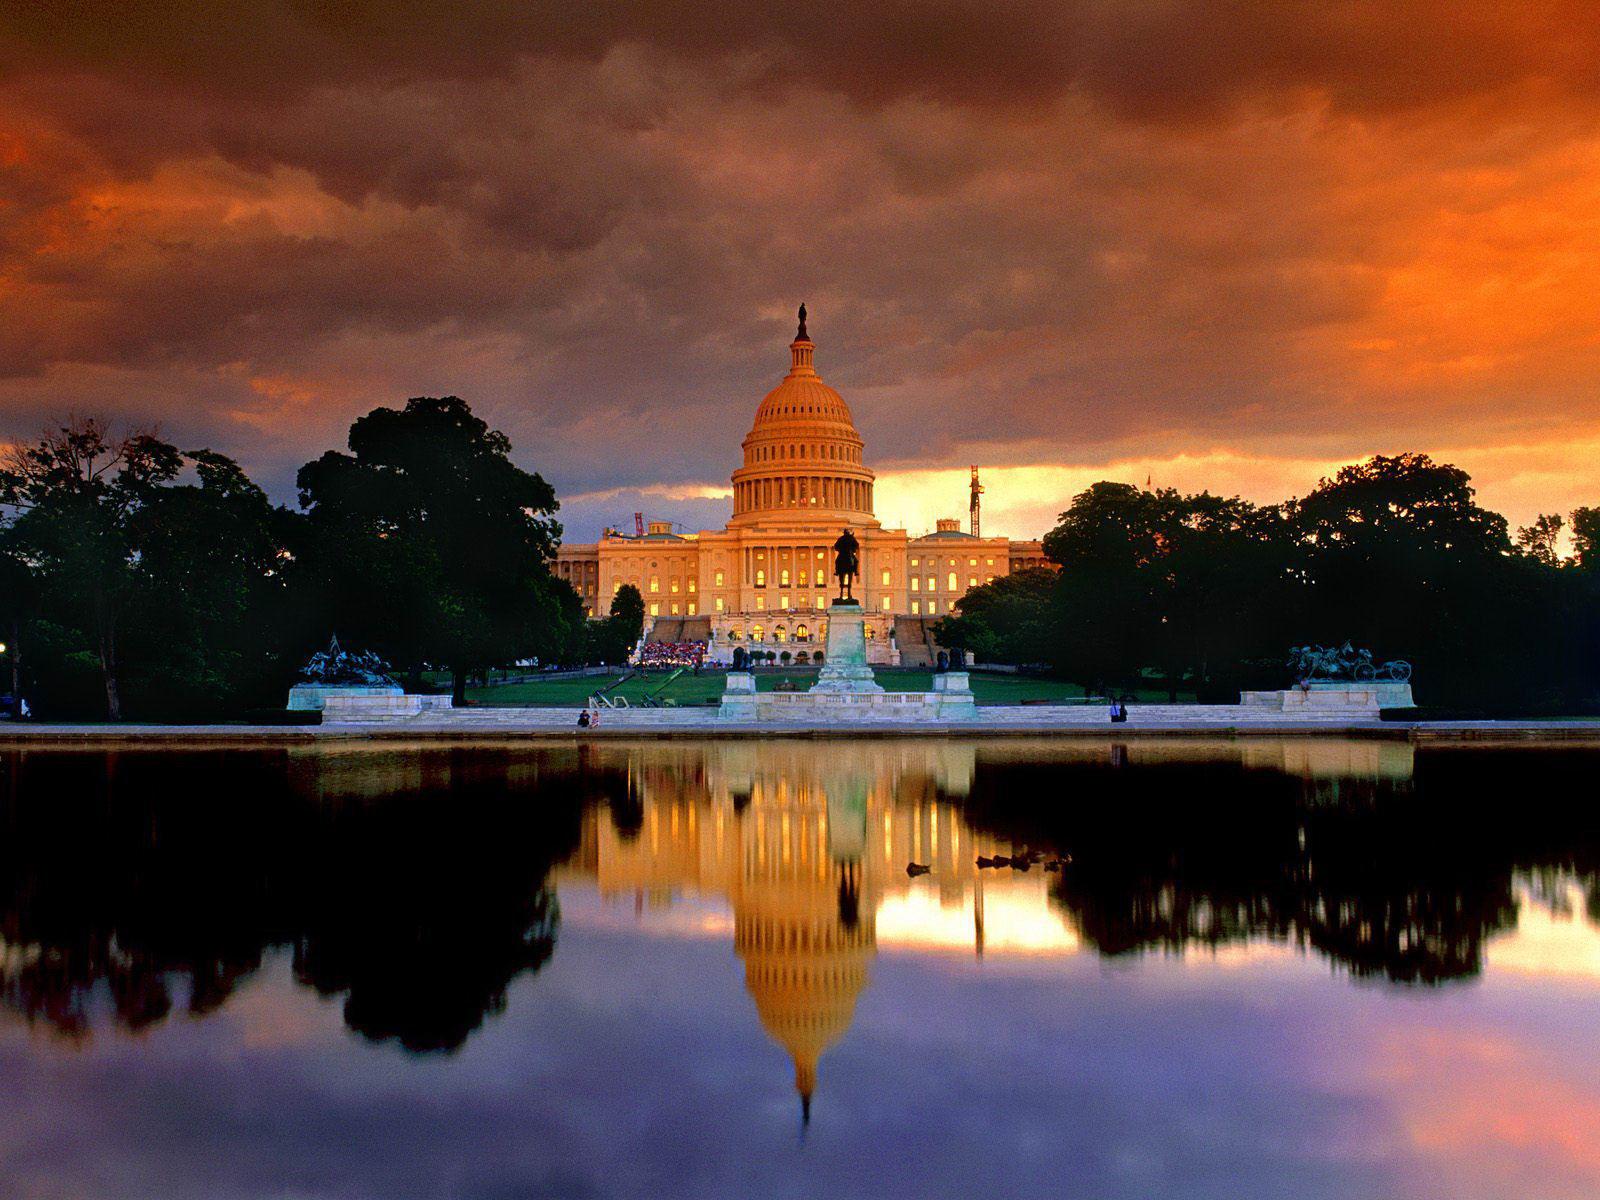 An awesome image of Washington DC